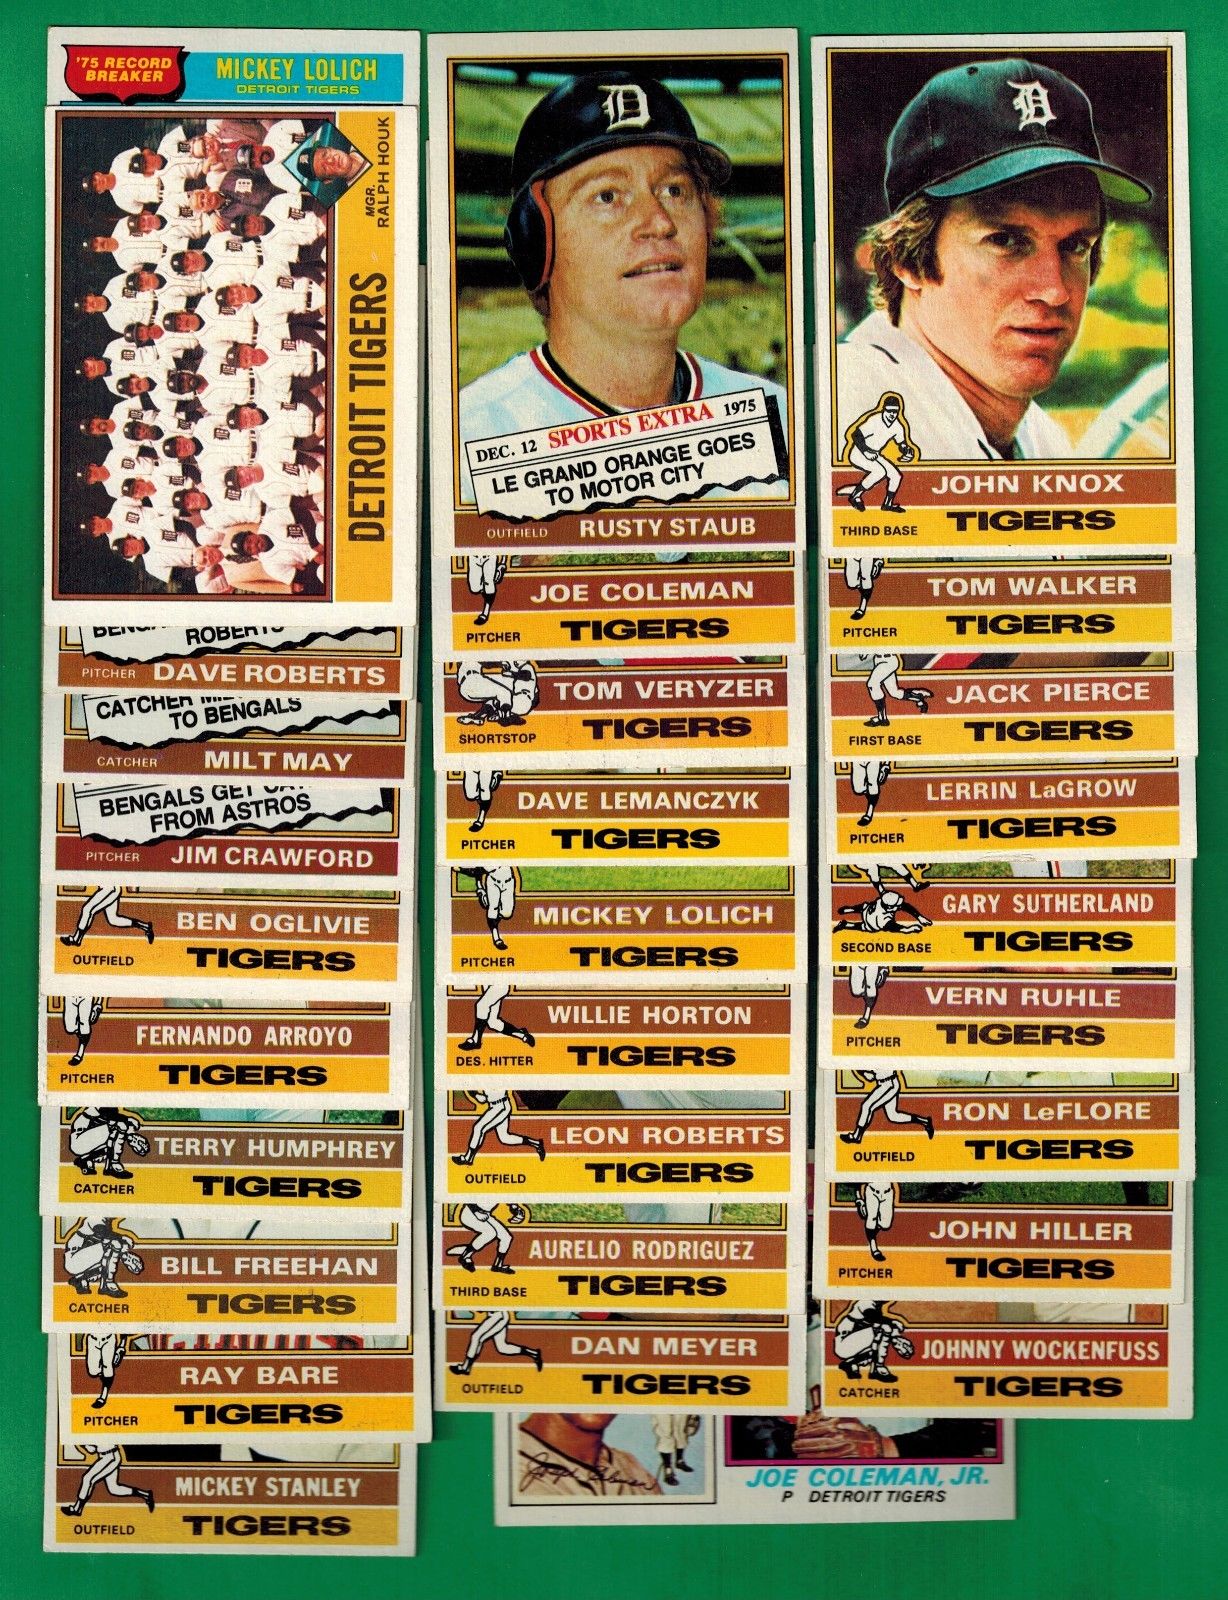 1976 BILL STEIN OPC #131 O-PEE-CHEE WHITE SOX *G5997 - OPC Baseball.com